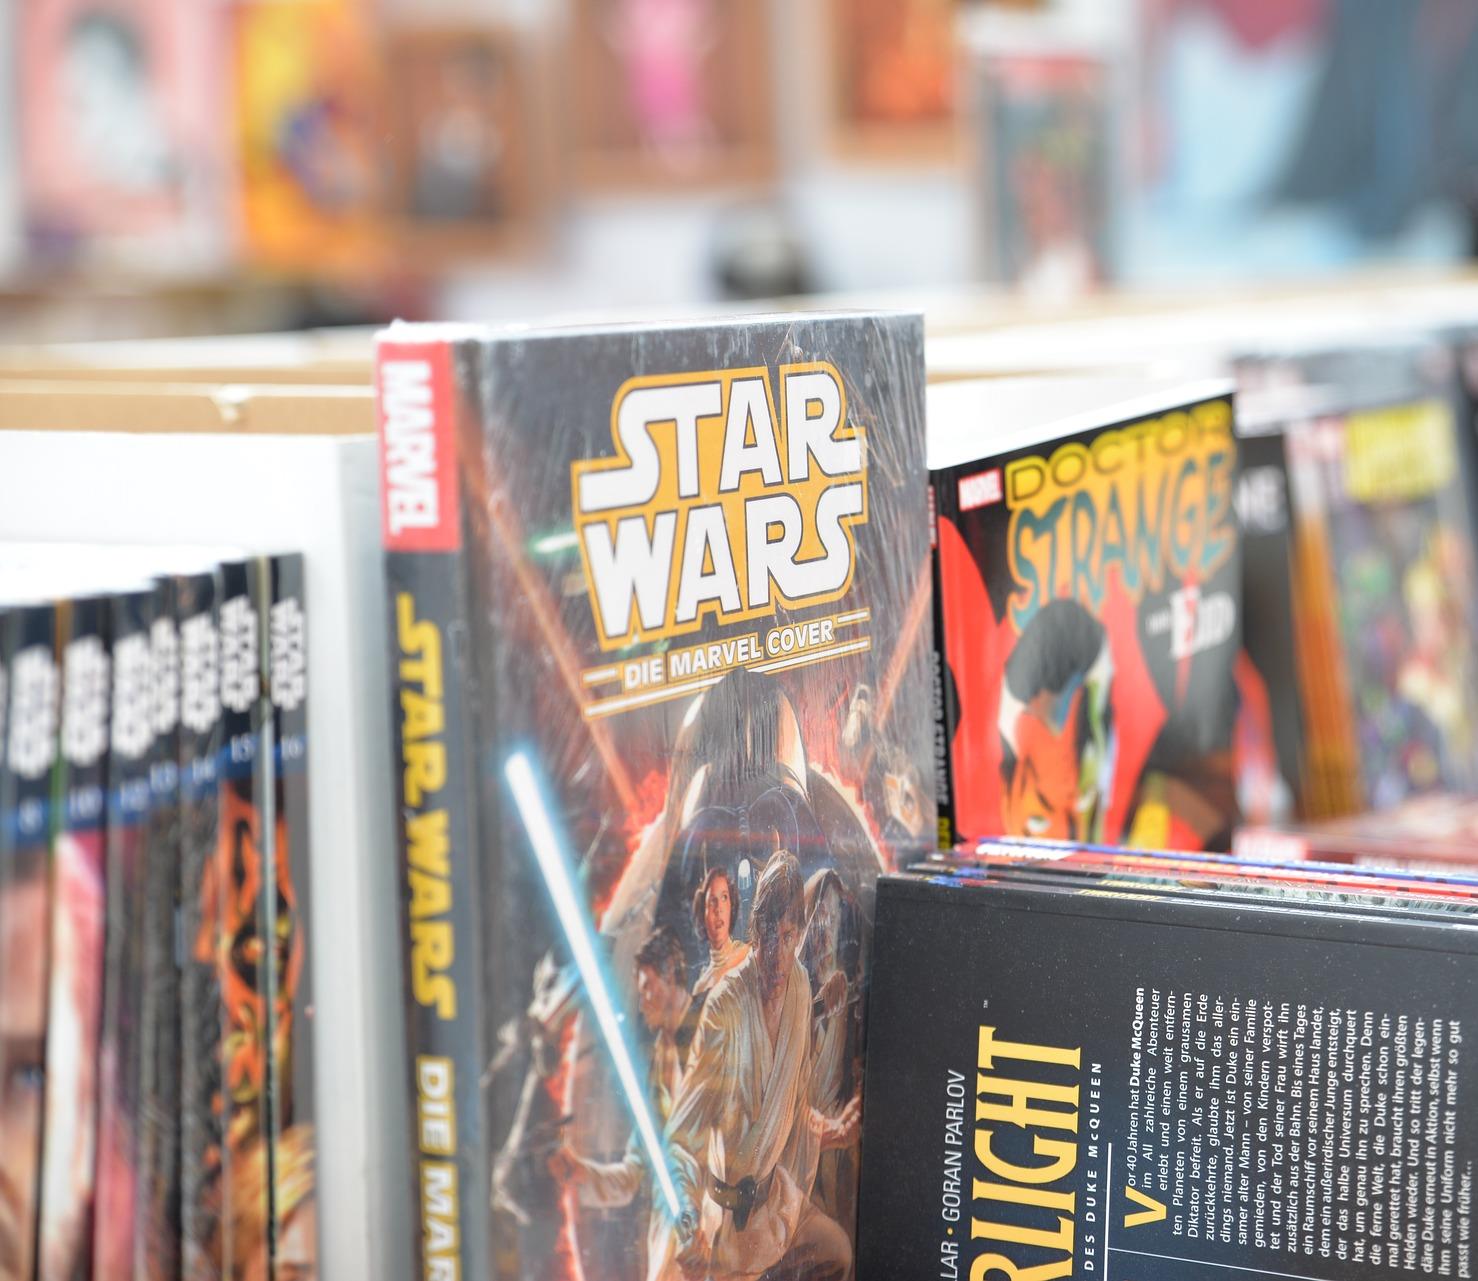 Star wars books on shelf